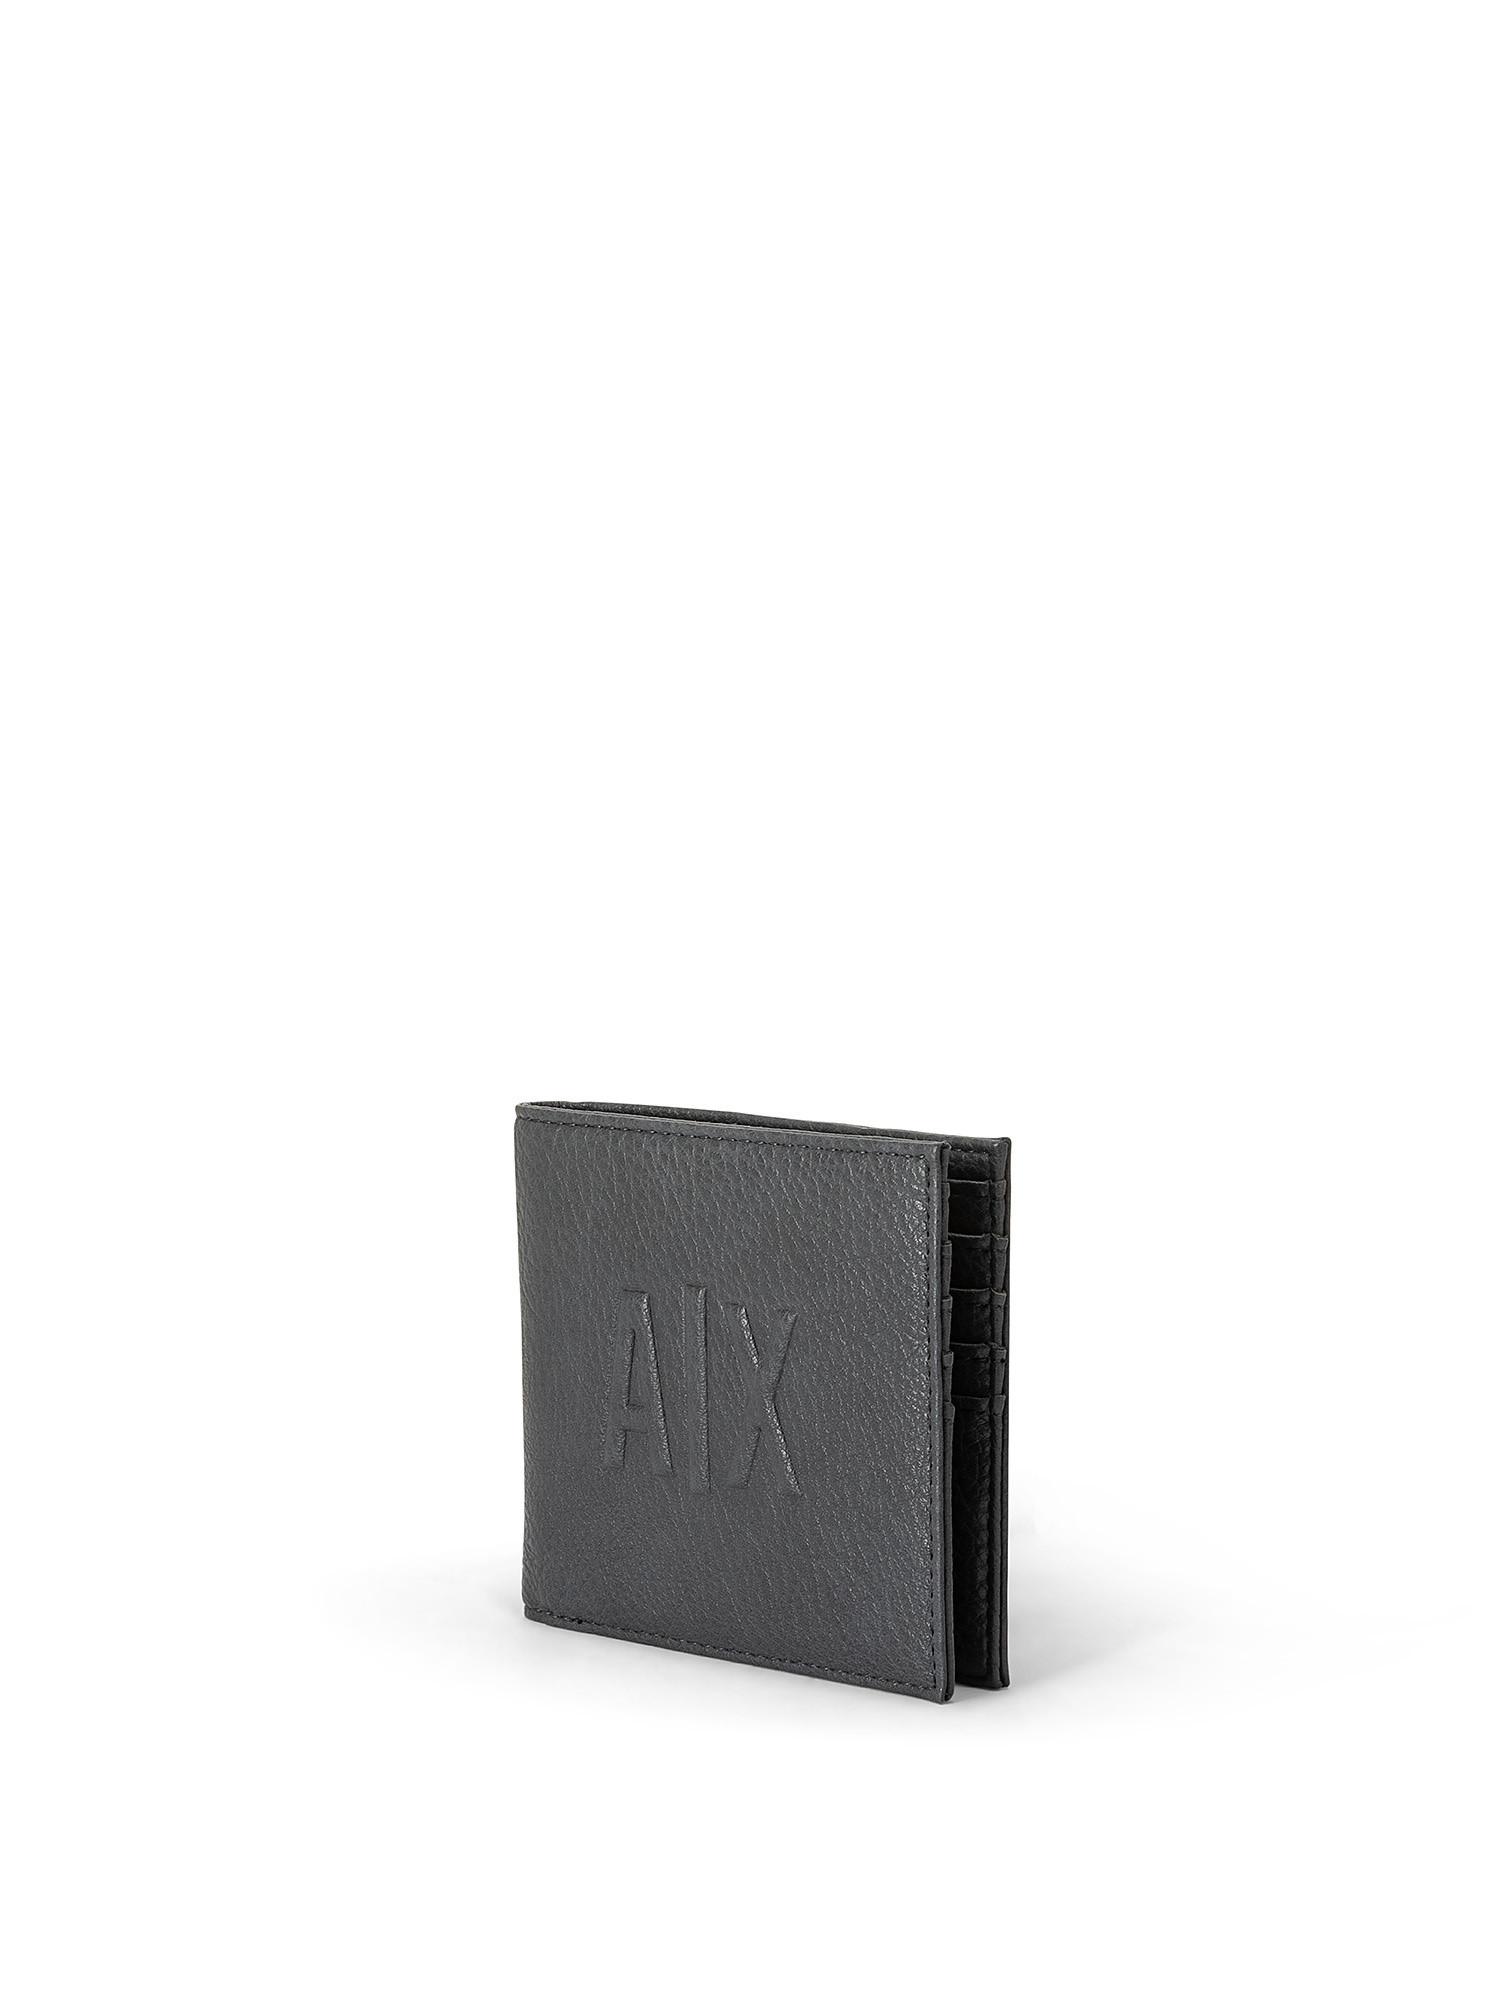 Armani Exchange - Wallet with logo, Dark Grey, large image number 1